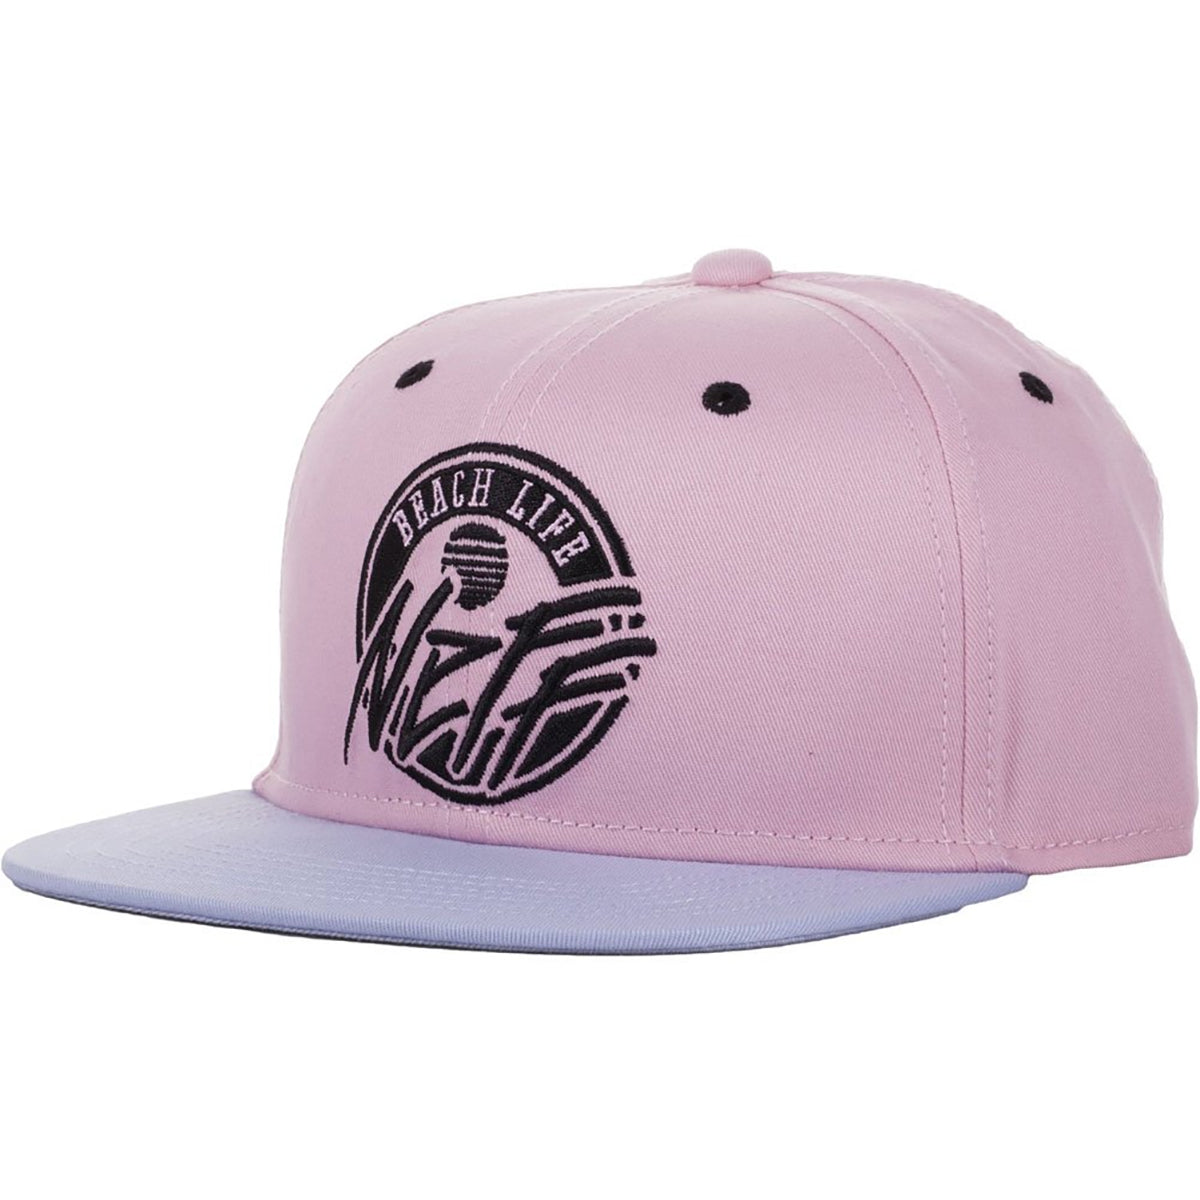 Neff Beach Life Men's Snapback Adjustable Hats - Pink